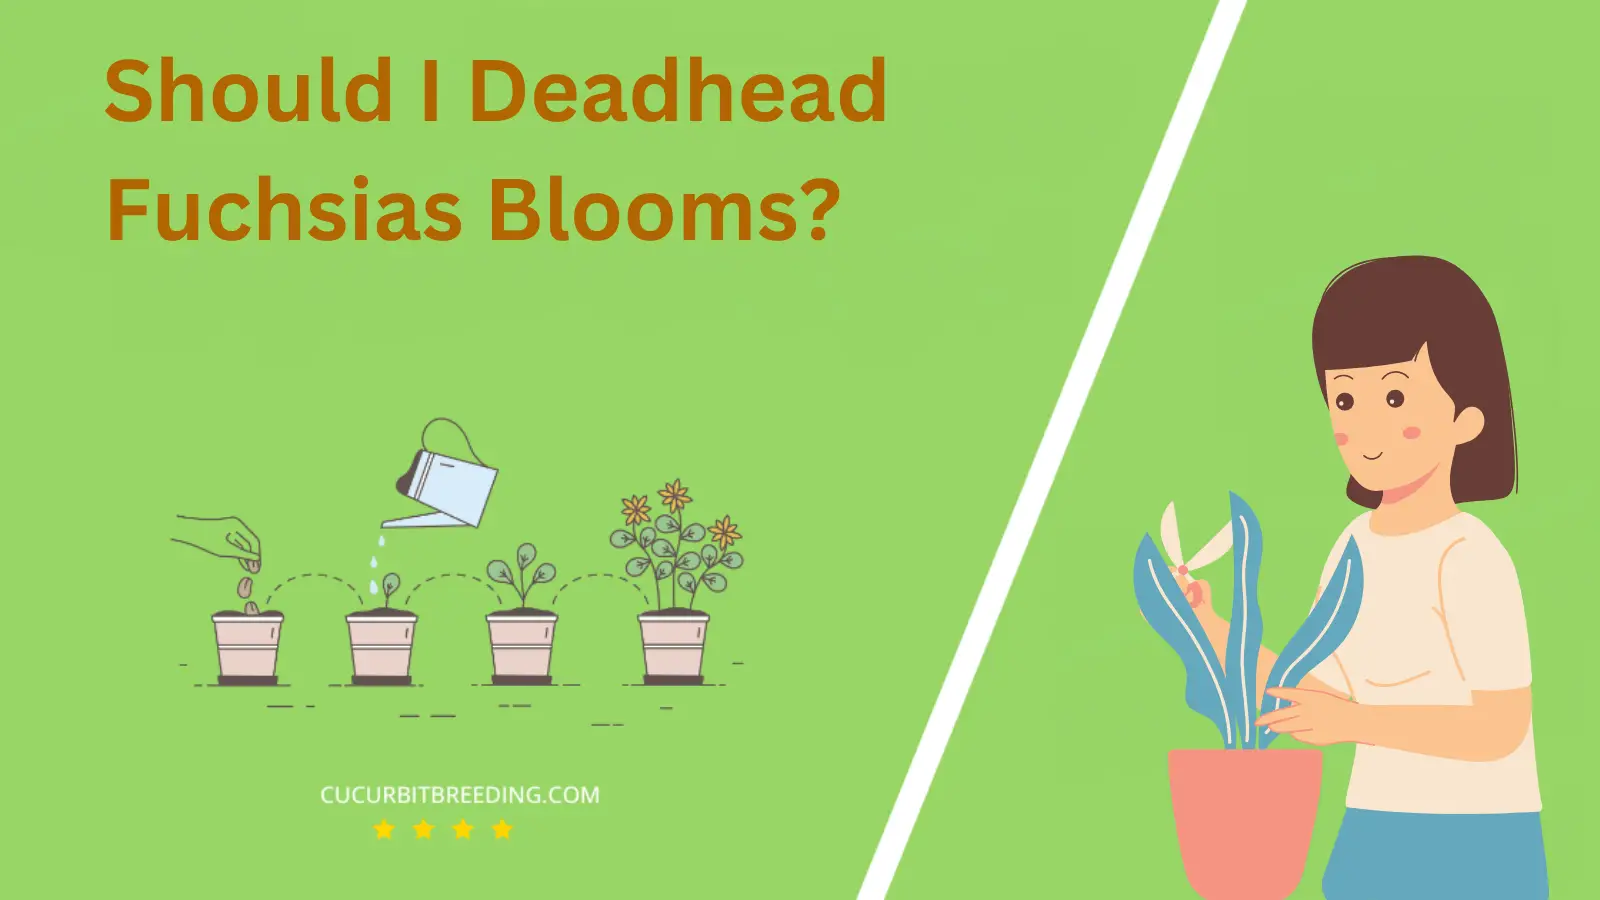 Should I Deadhead Fuchsias Blooms?